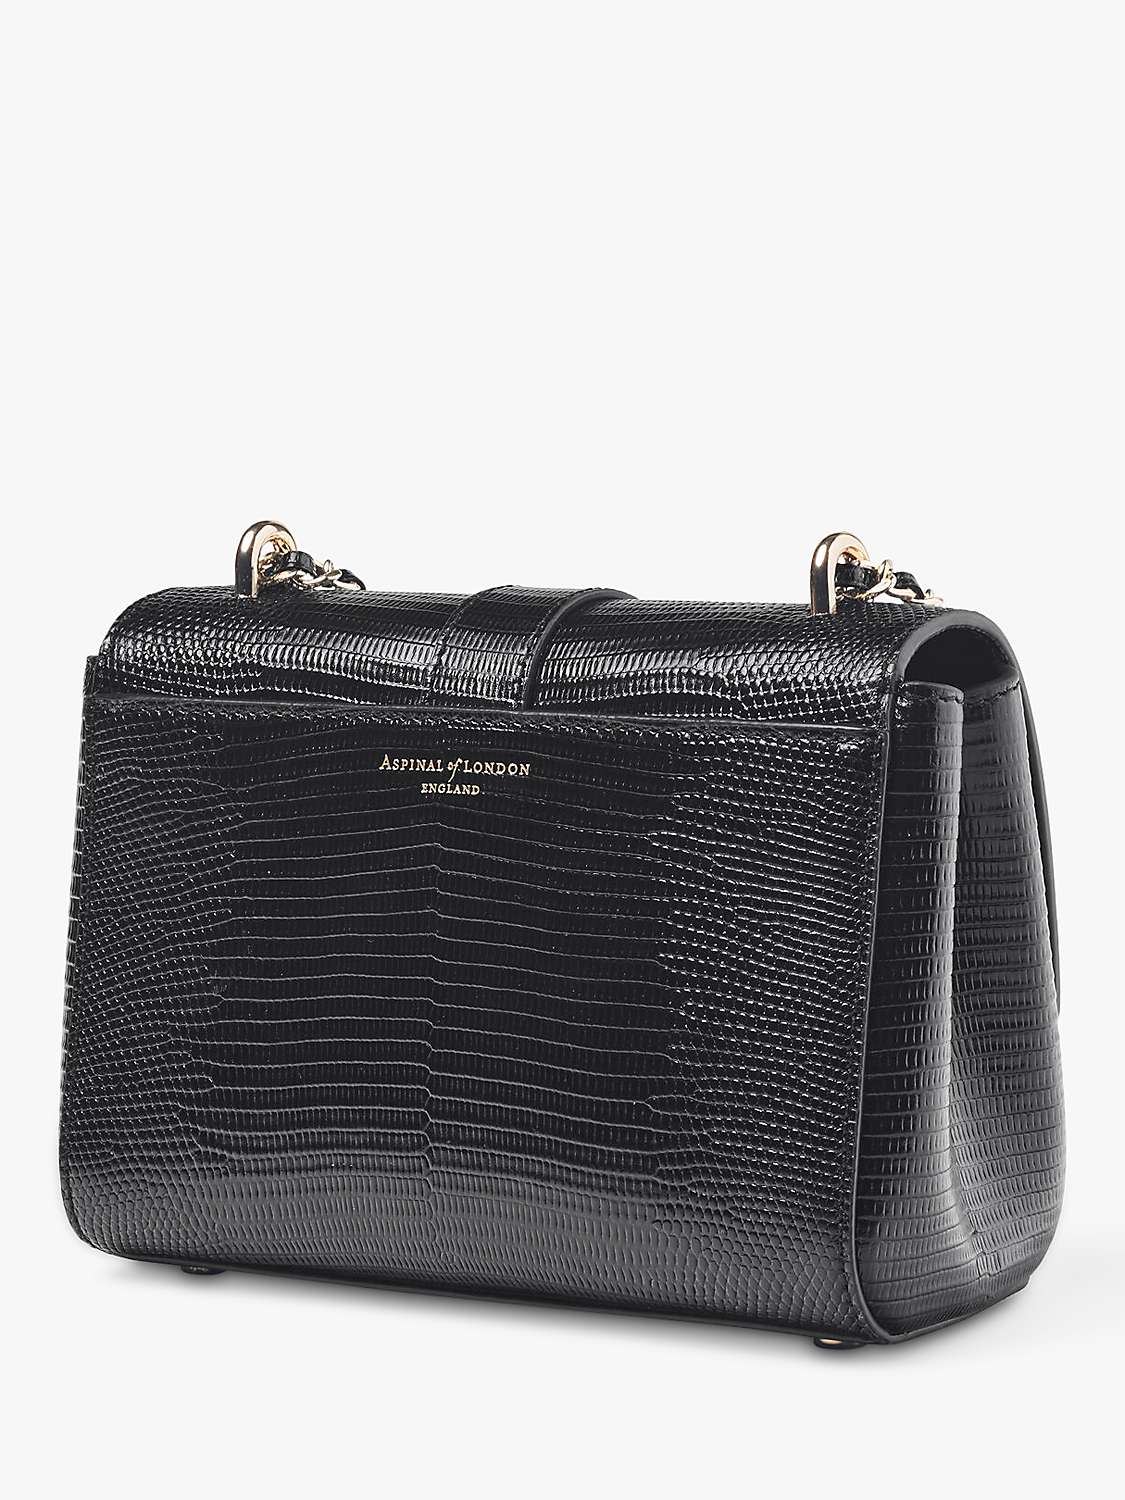 Buy Aspinal of London Lottie Small Lizard Leather Shoulder Bag Online at johnlewis.com